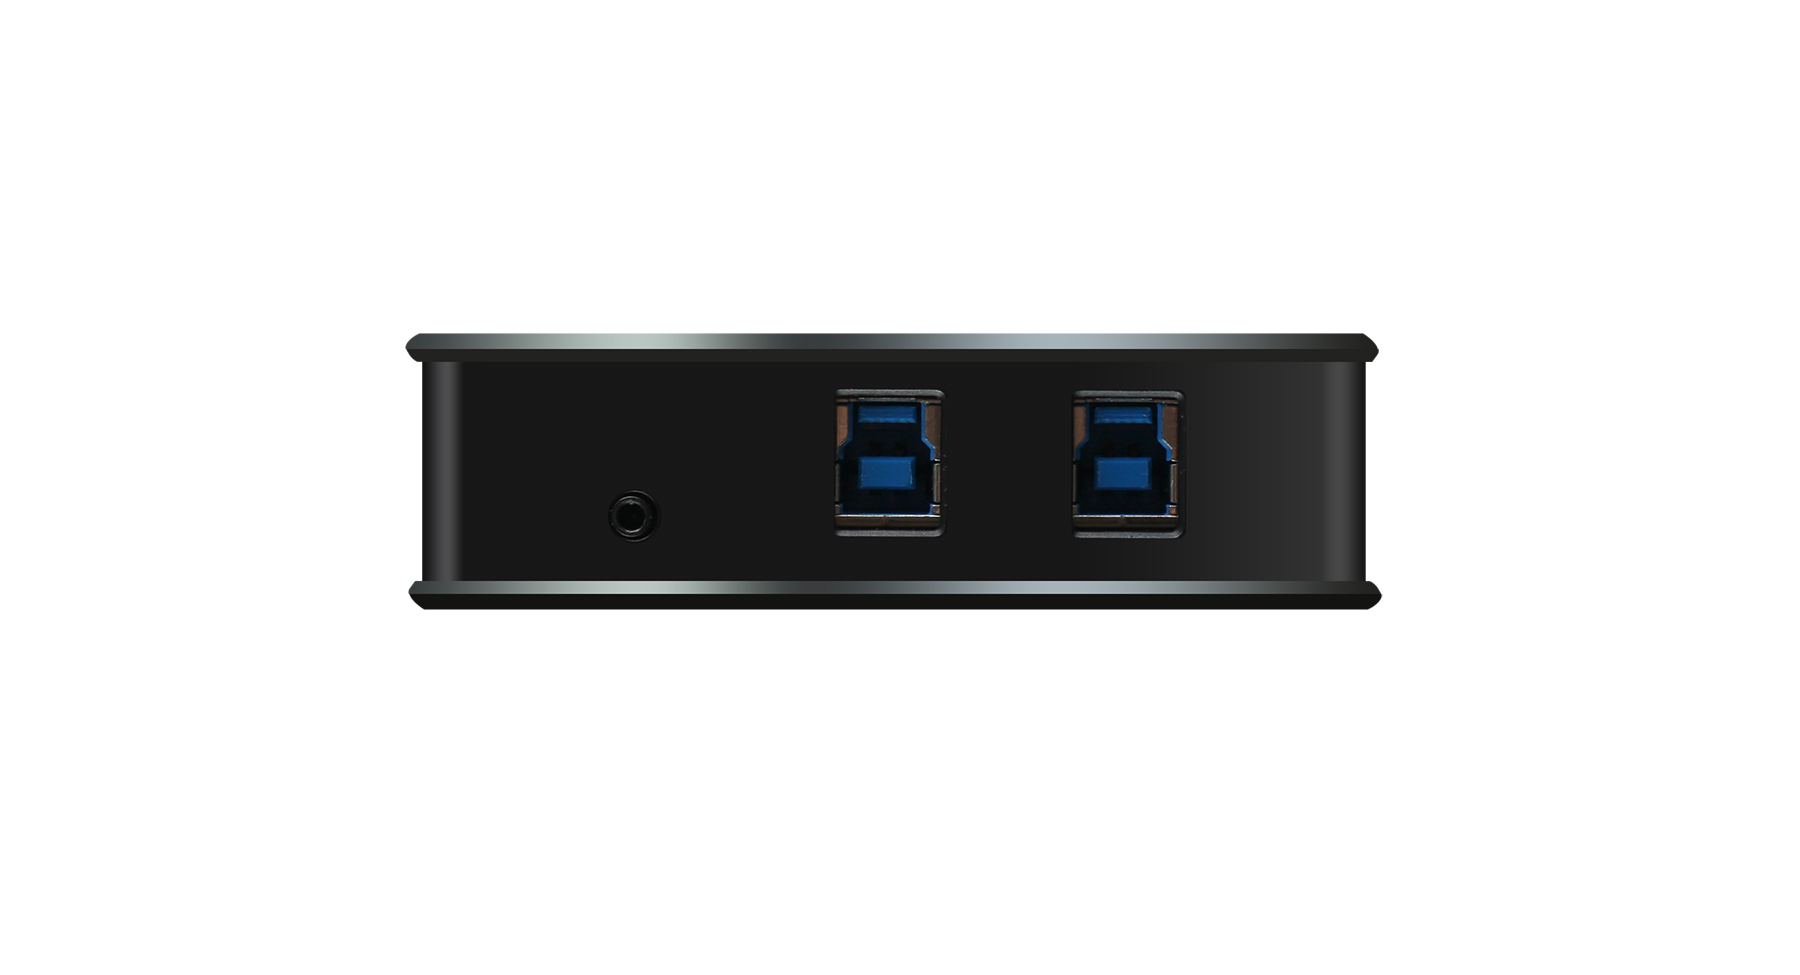 IOGEAR - 2x4 USB 3.0 Peripheral Sharing with USB-C Adapter